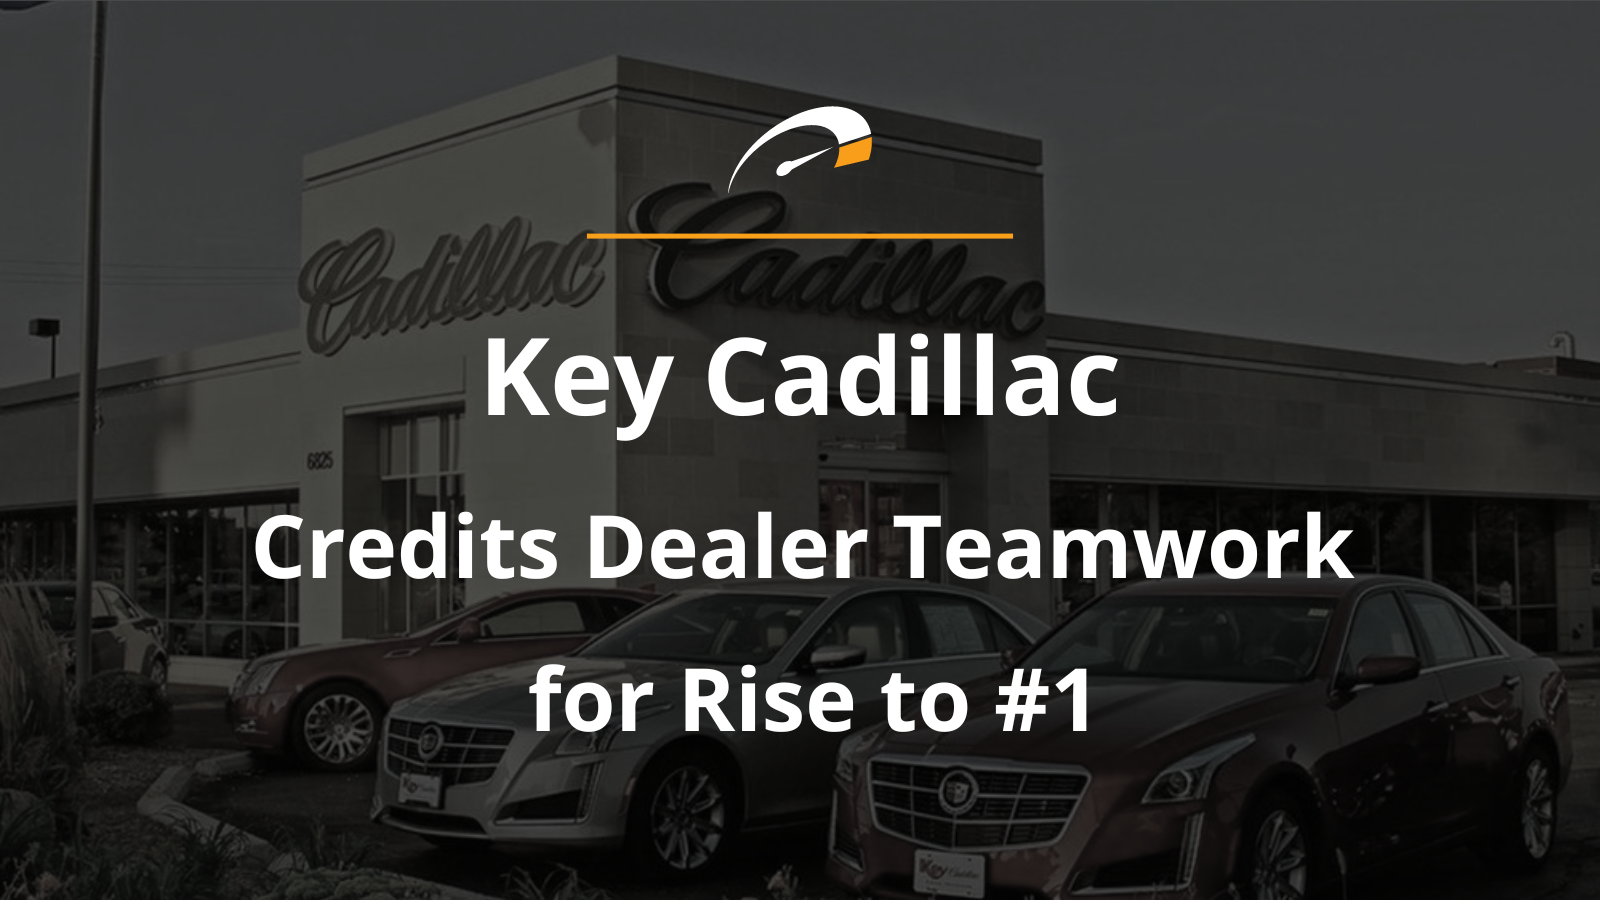 Key Cadillac Drives Success with Dealer Teamwork: Case Study